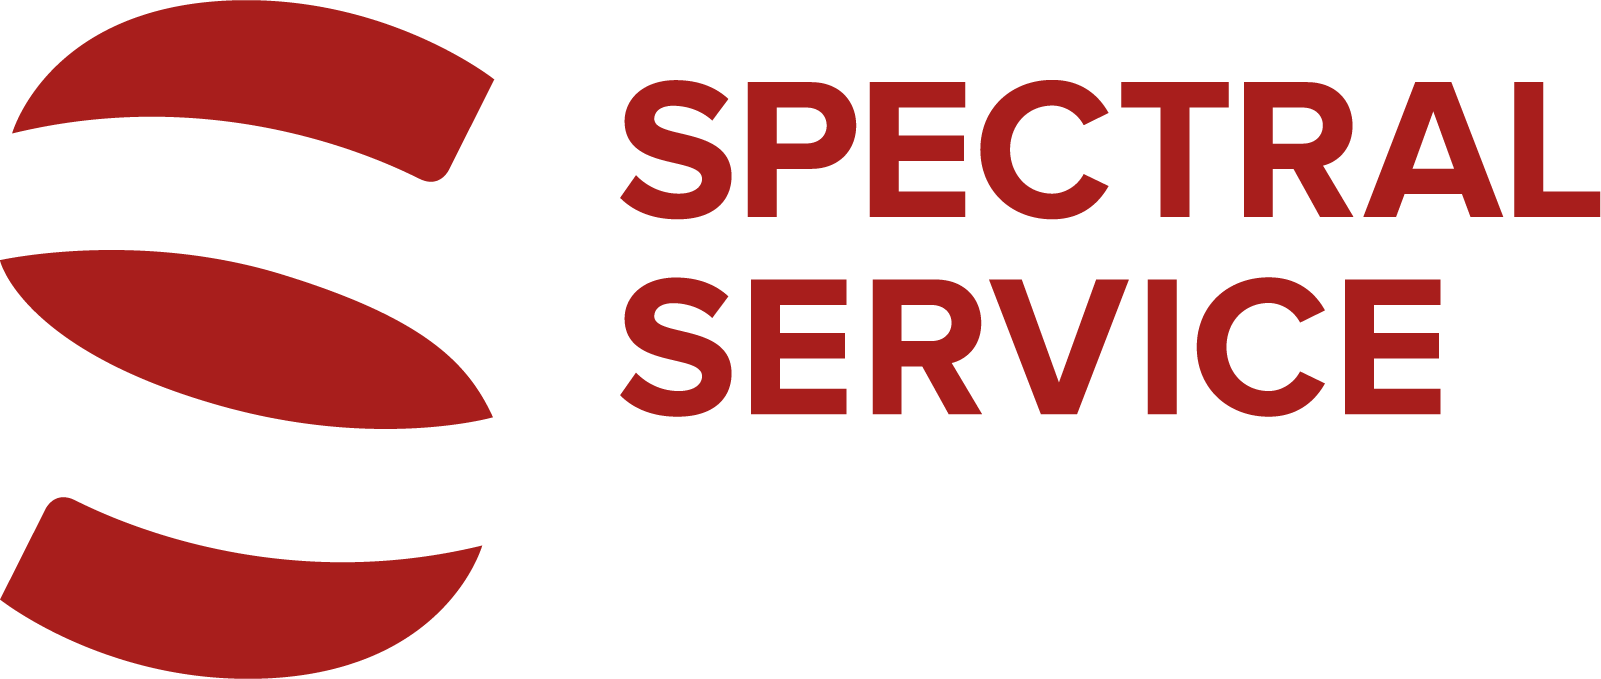 Spectral Service